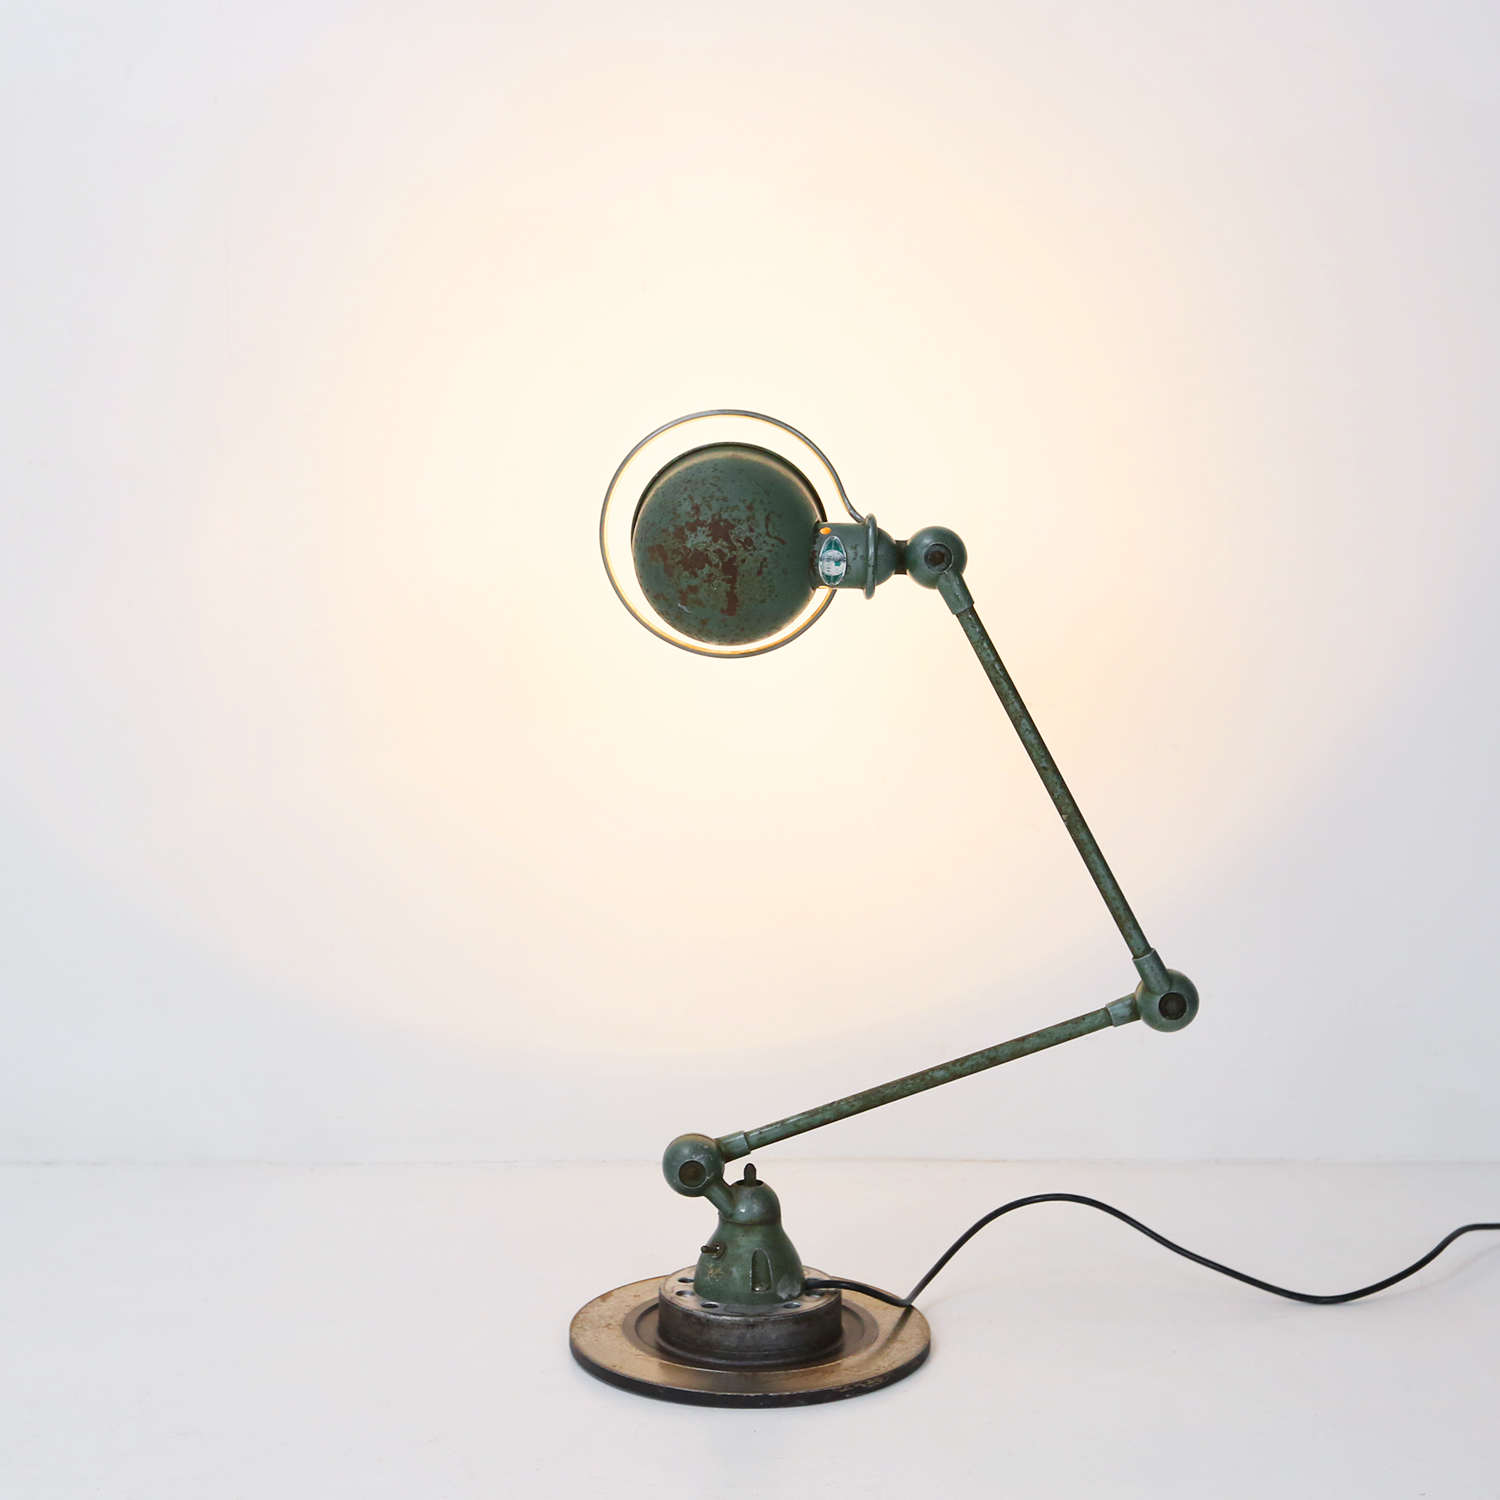 Industrial table lamp by Jieldethumbnail